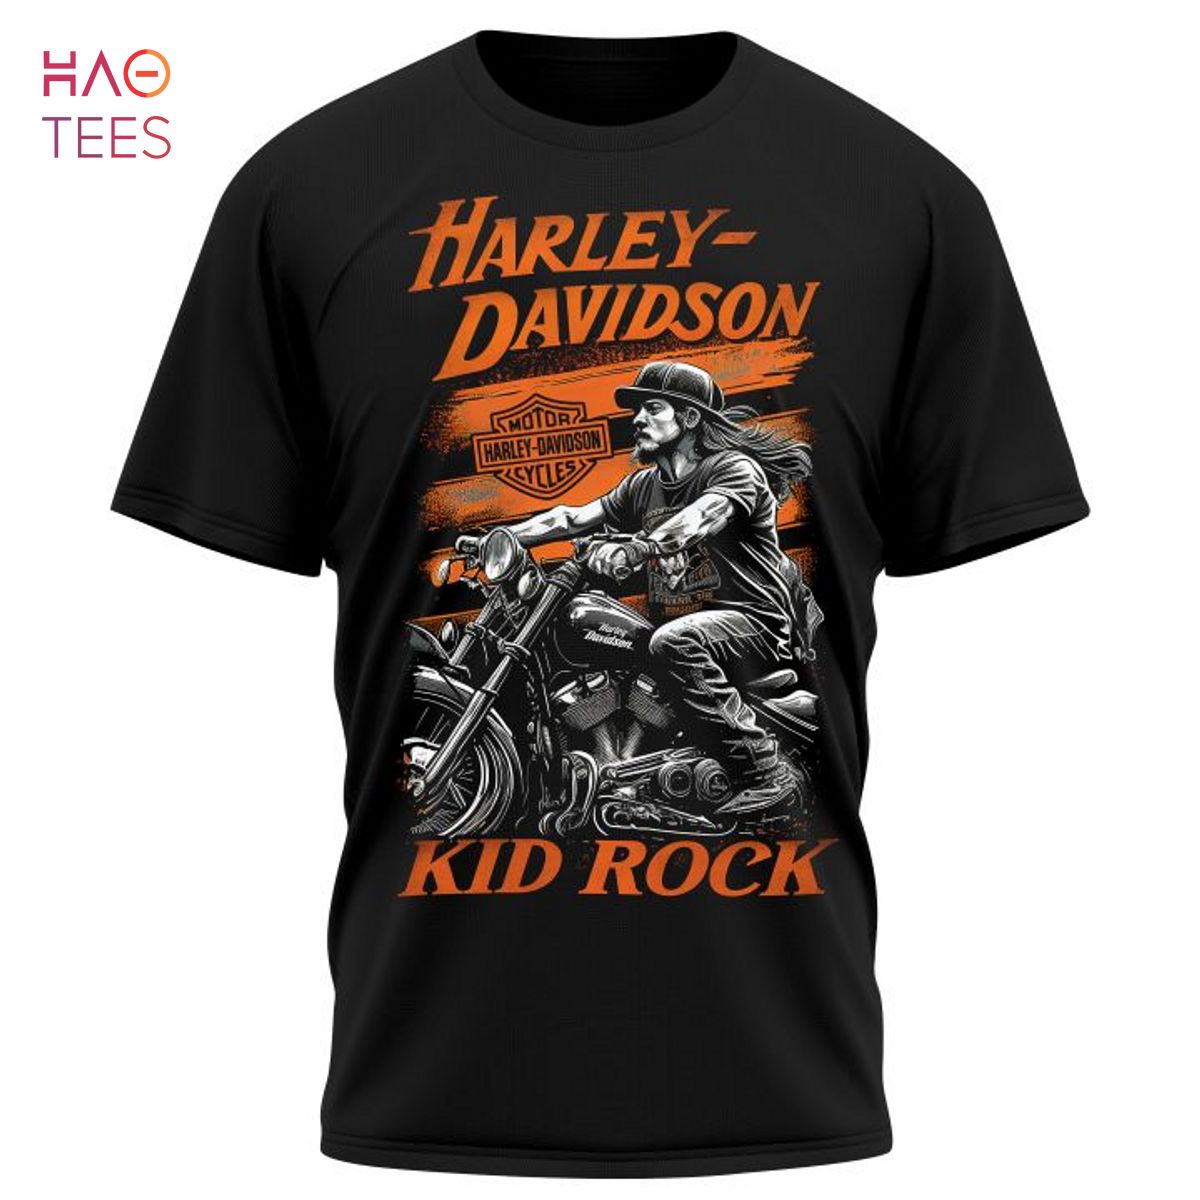 Harley Davidson Kid Rock T-Shirt Limited Edition